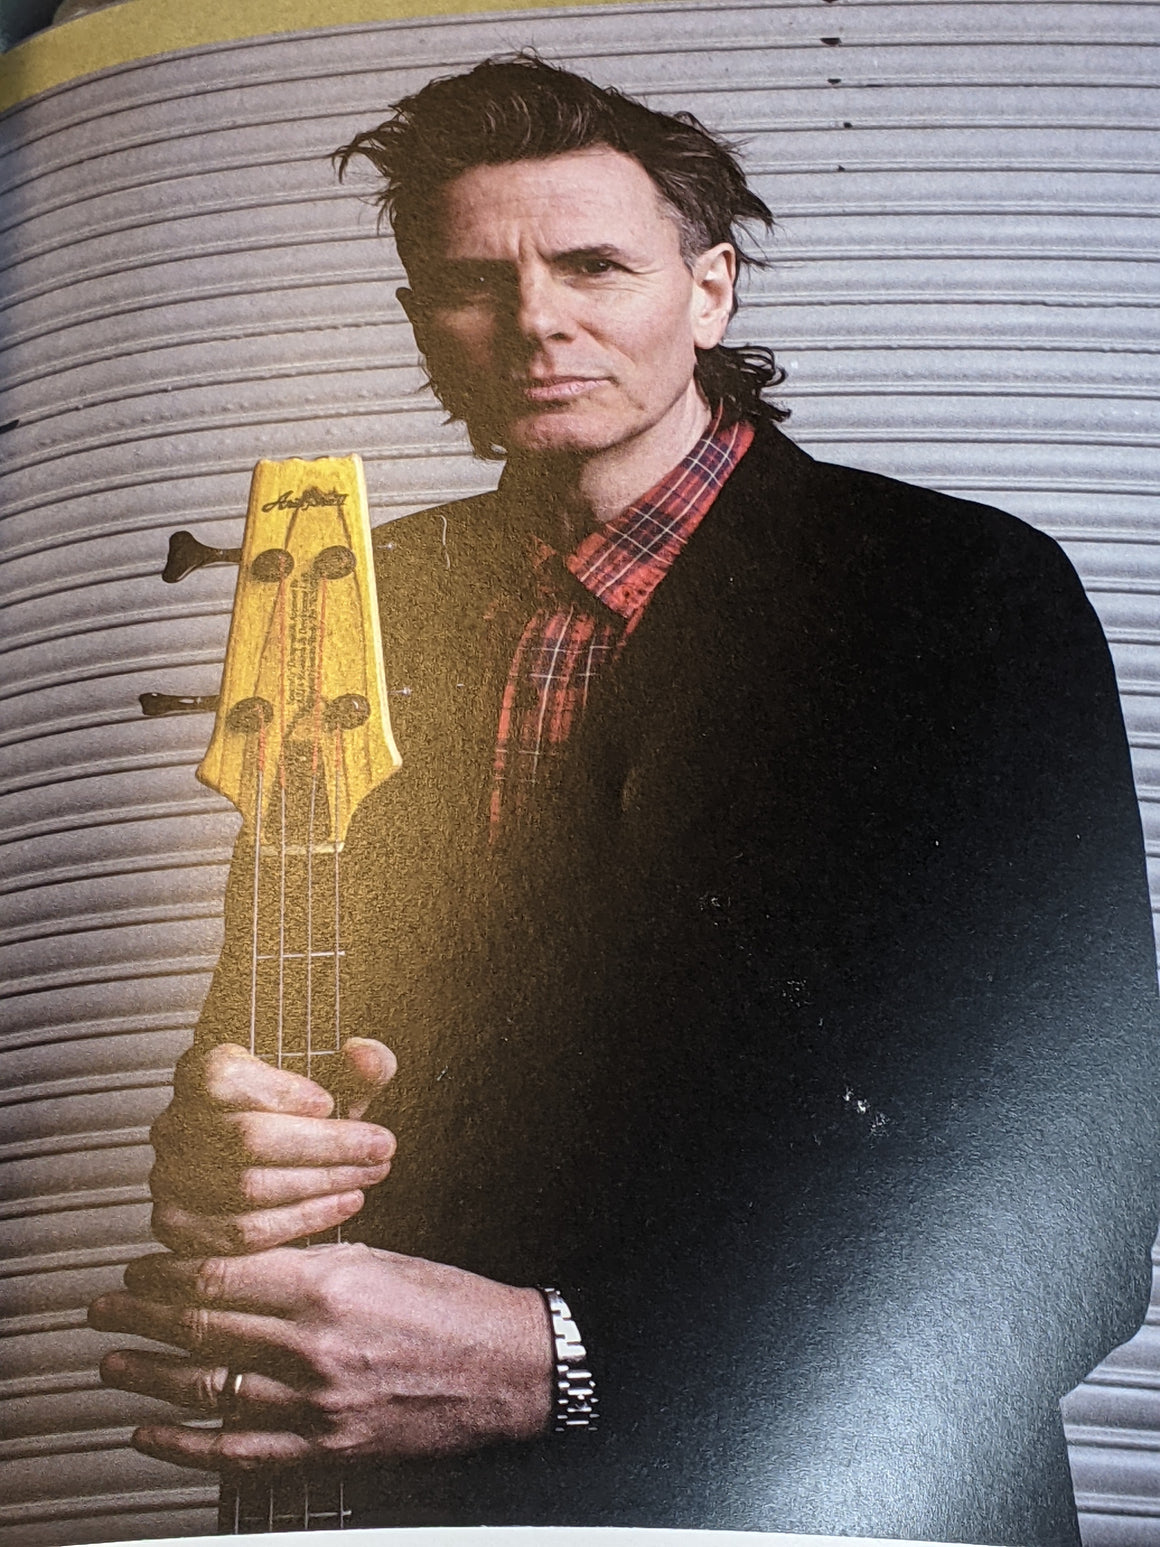 Bass Player UK Magazine Magazine 416 John Taylor Duran Duran (Random Cover)